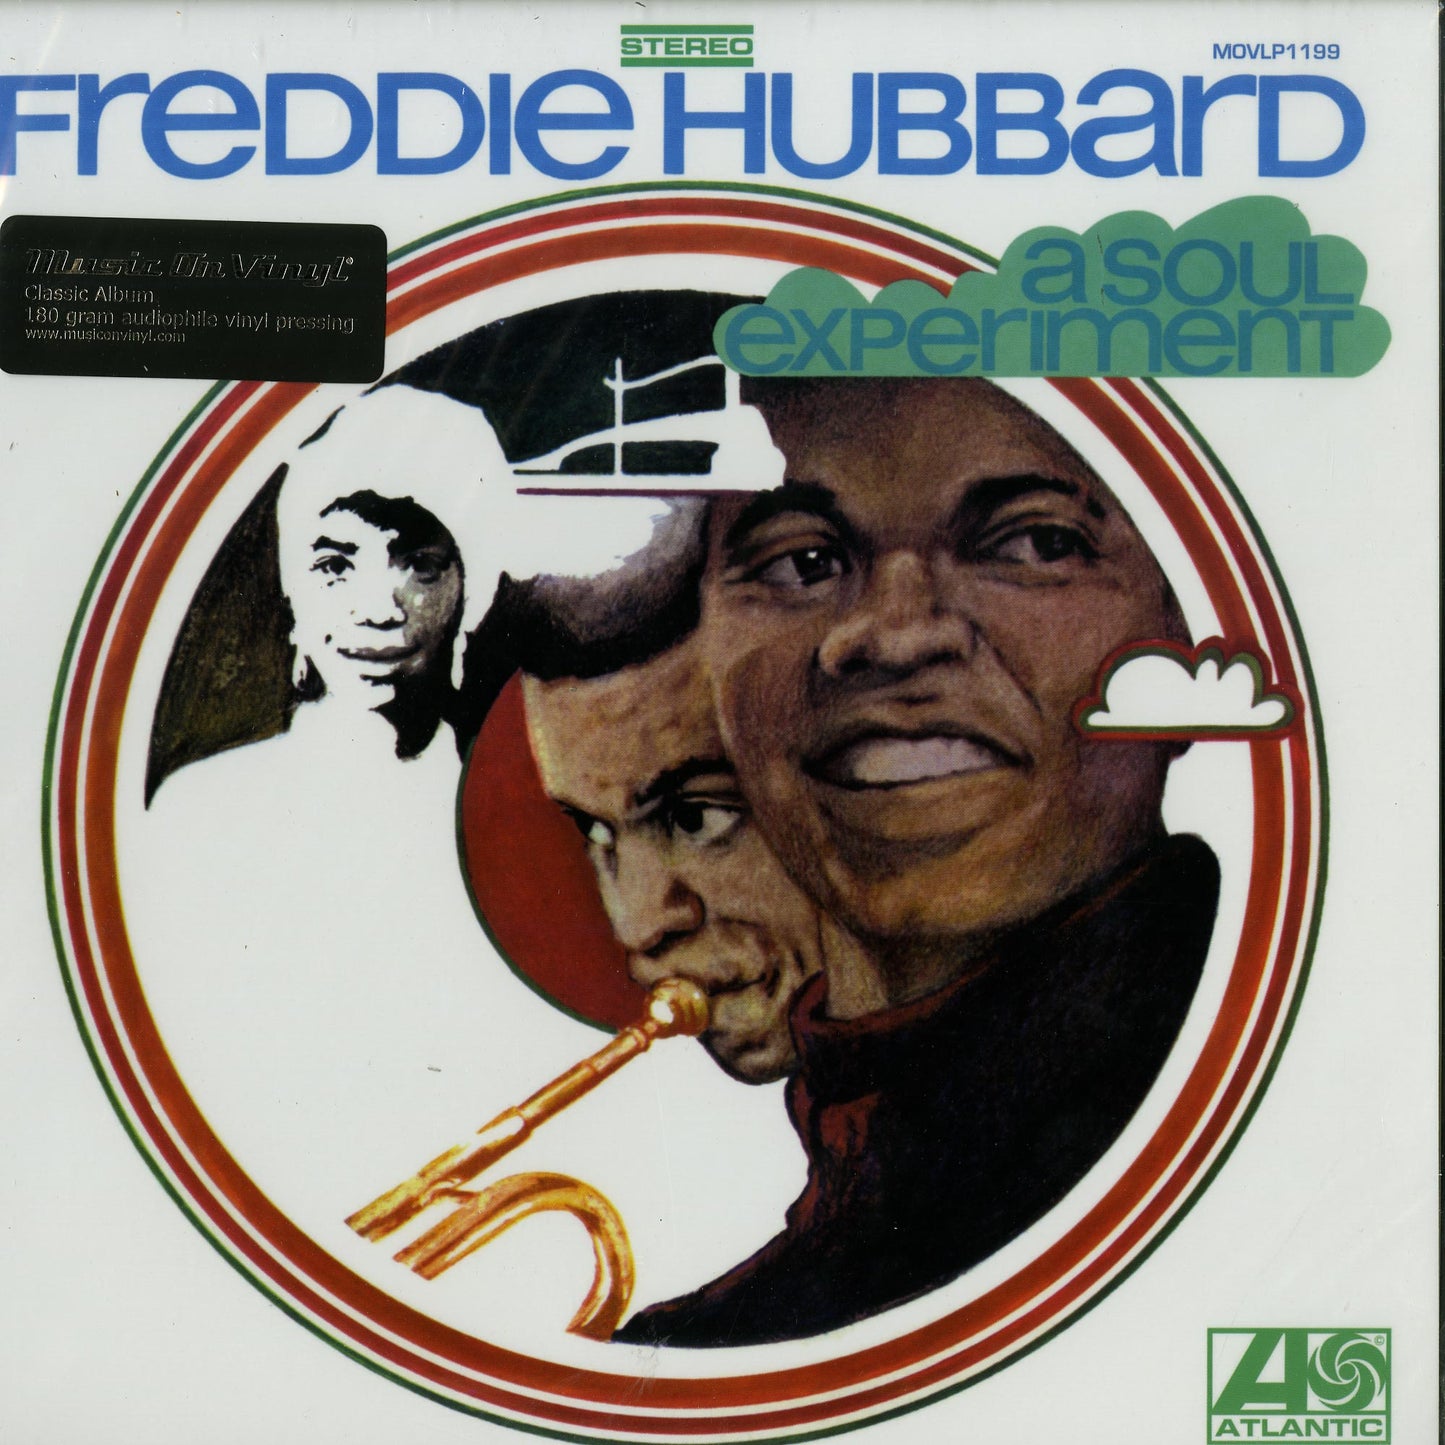 Freddie Hubbard ‎– A Soul Experiment